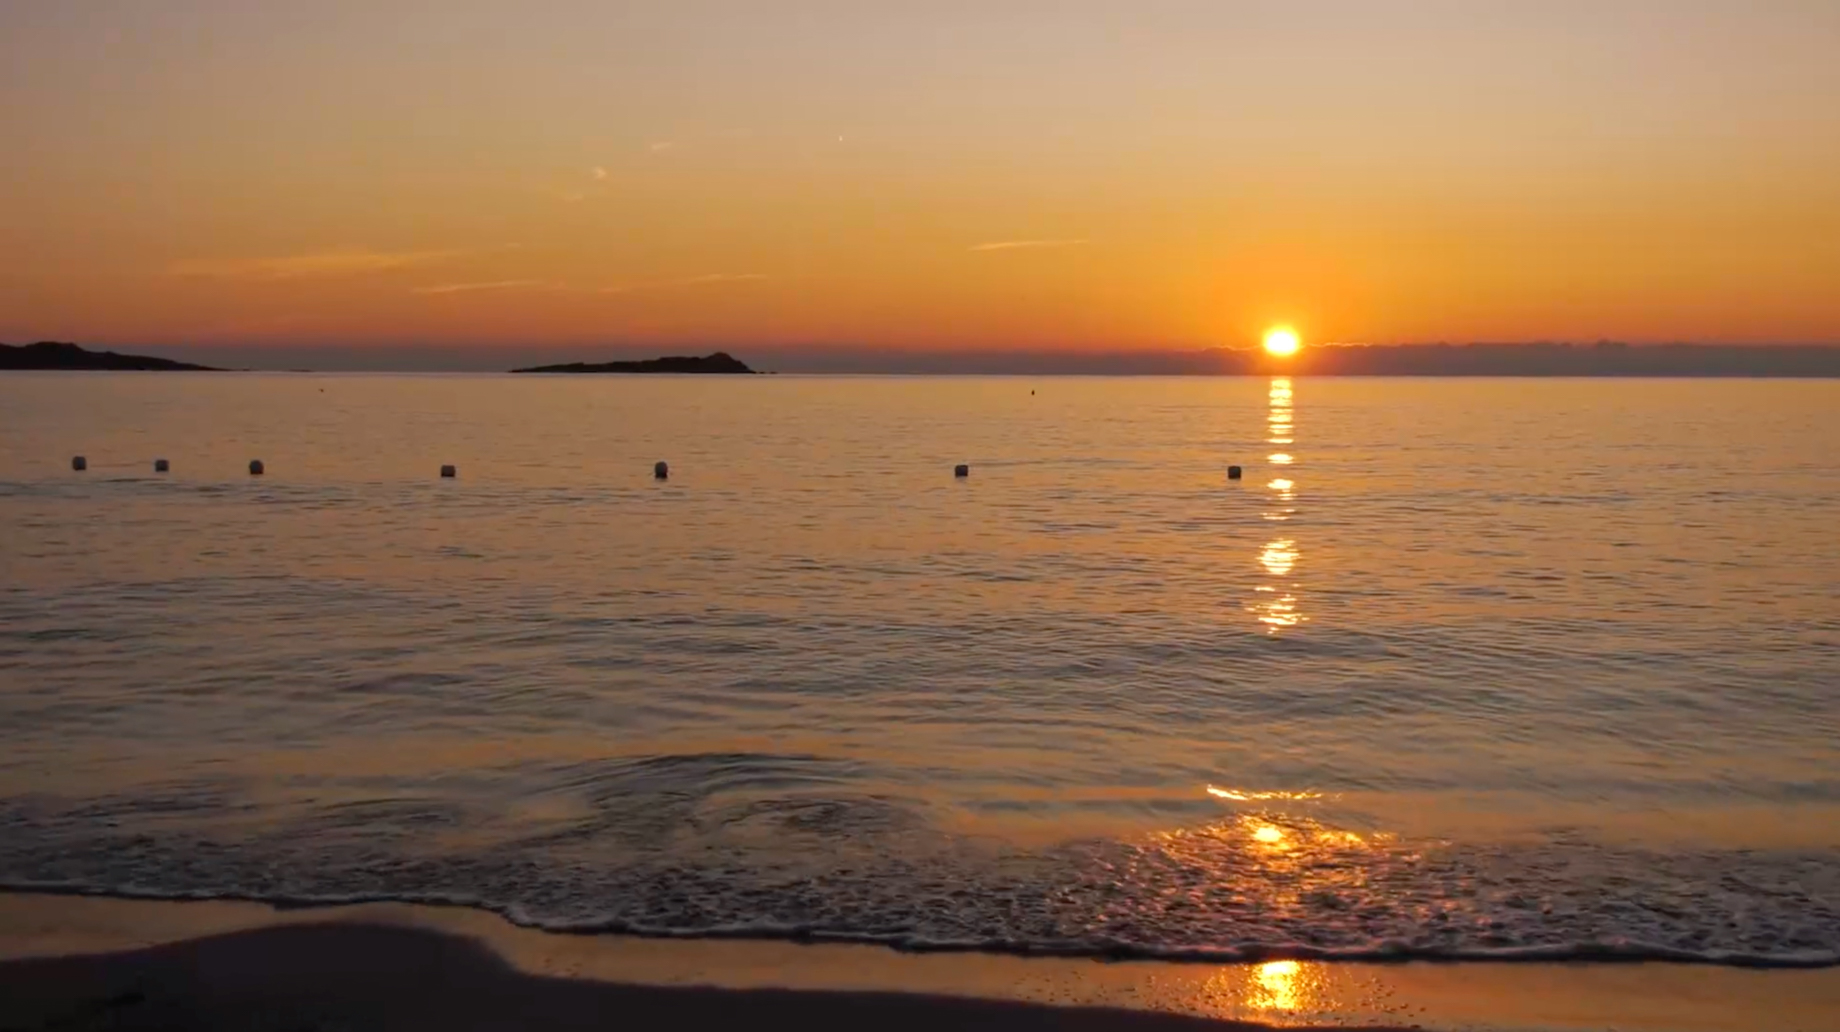 Baglioni Resort Sardinia – San Teodoro, Sardegna, Italy – Beach Sunset